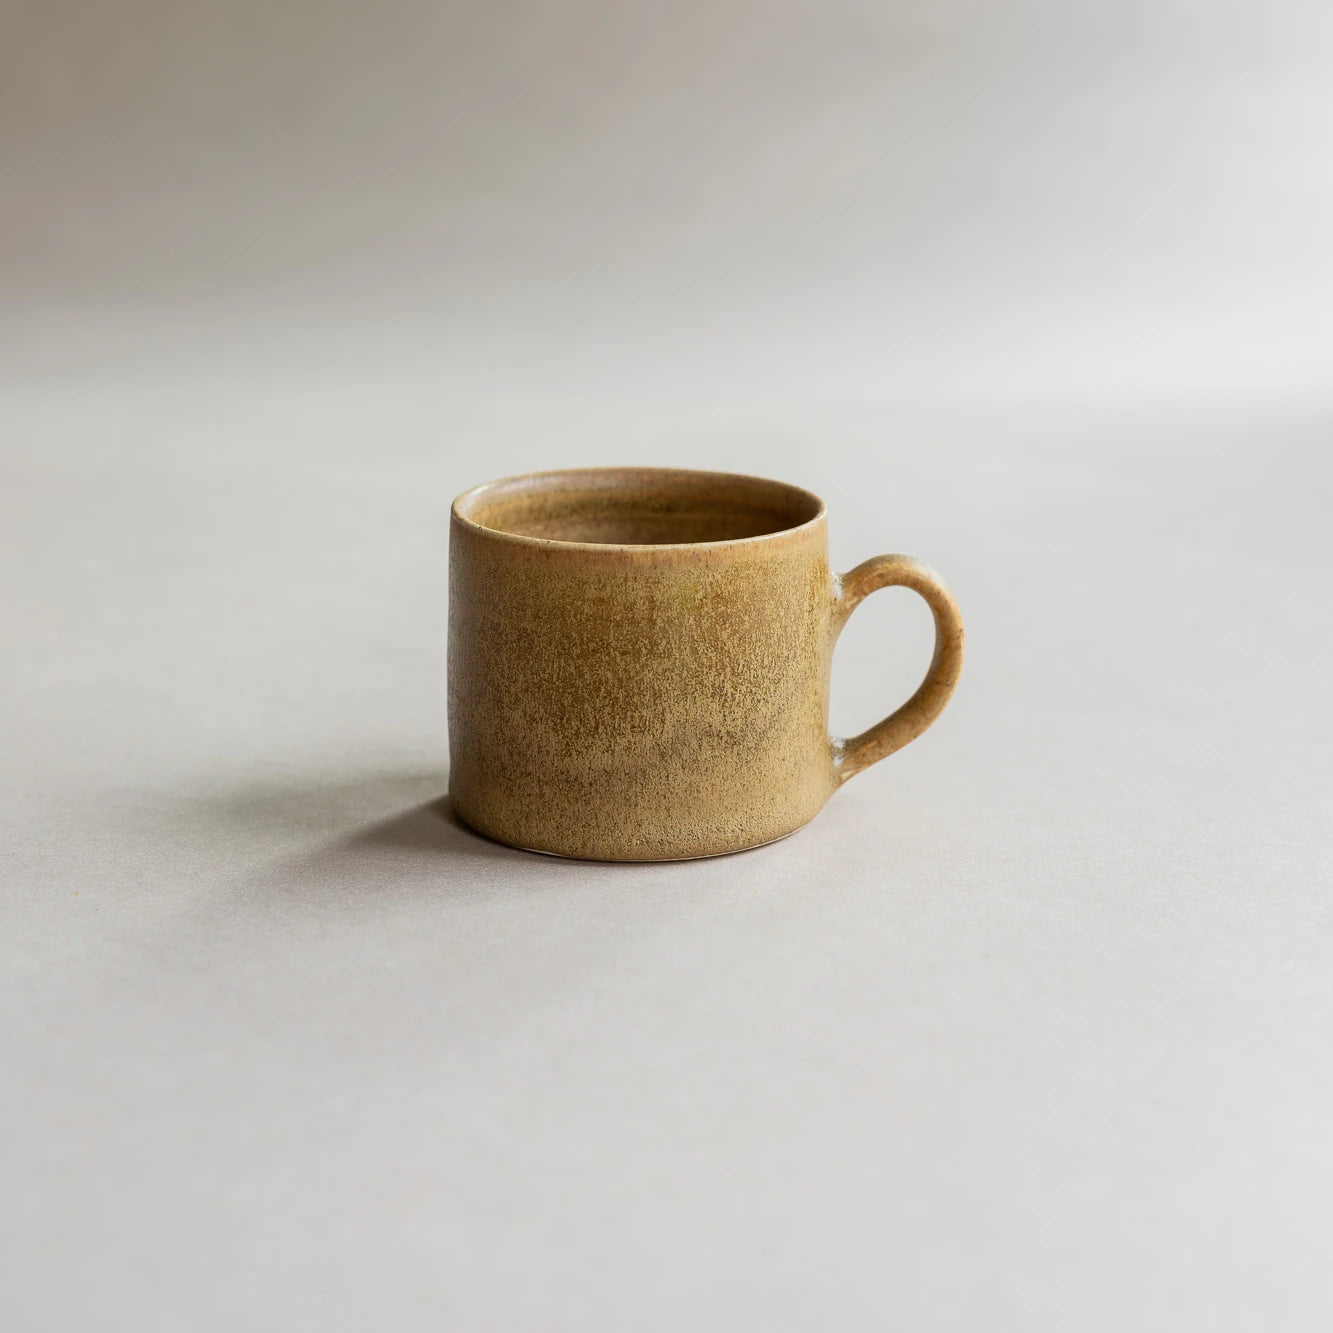 Espresso cup in Toffee by Sophia McEvoy Ceramics - Lifestory